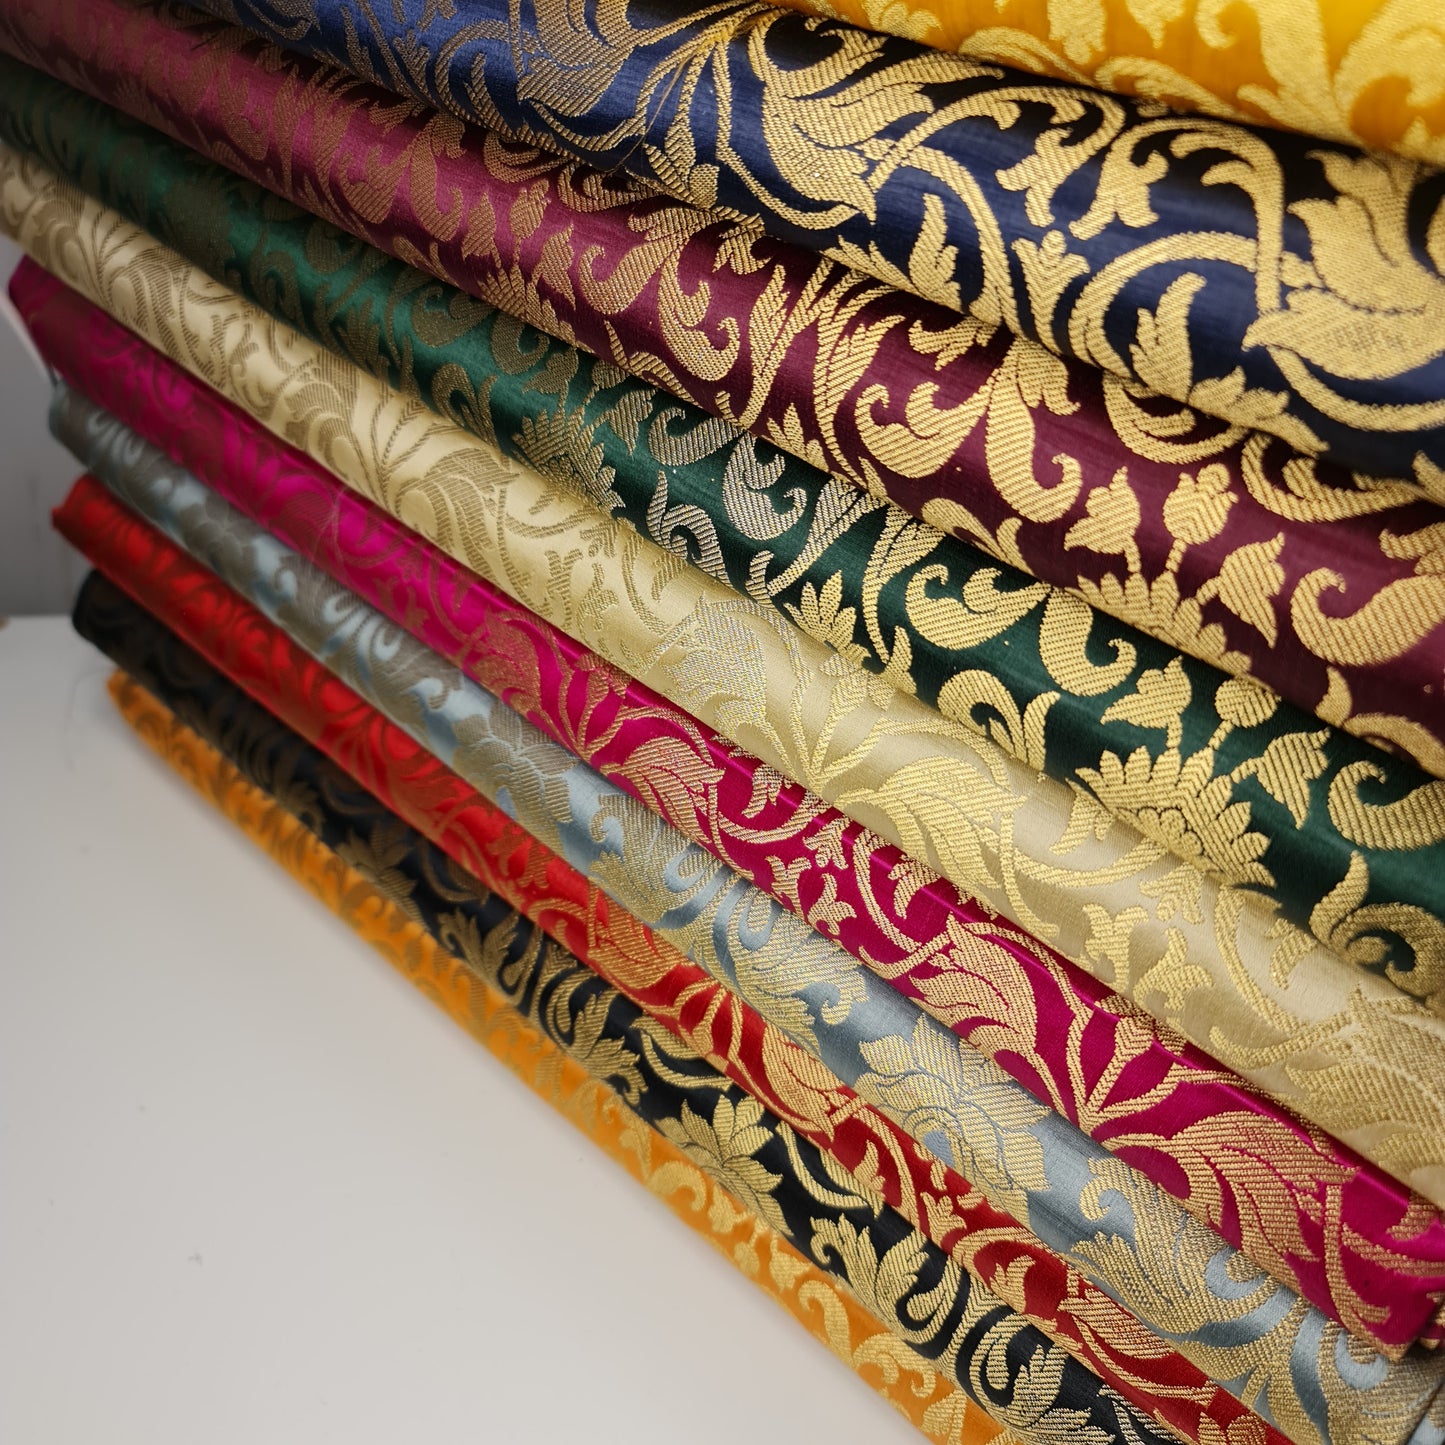 Luxurious Floral Gold Metallic Indian Banarasi Brocade Fabric 44" By The Meter (MUSTARD)